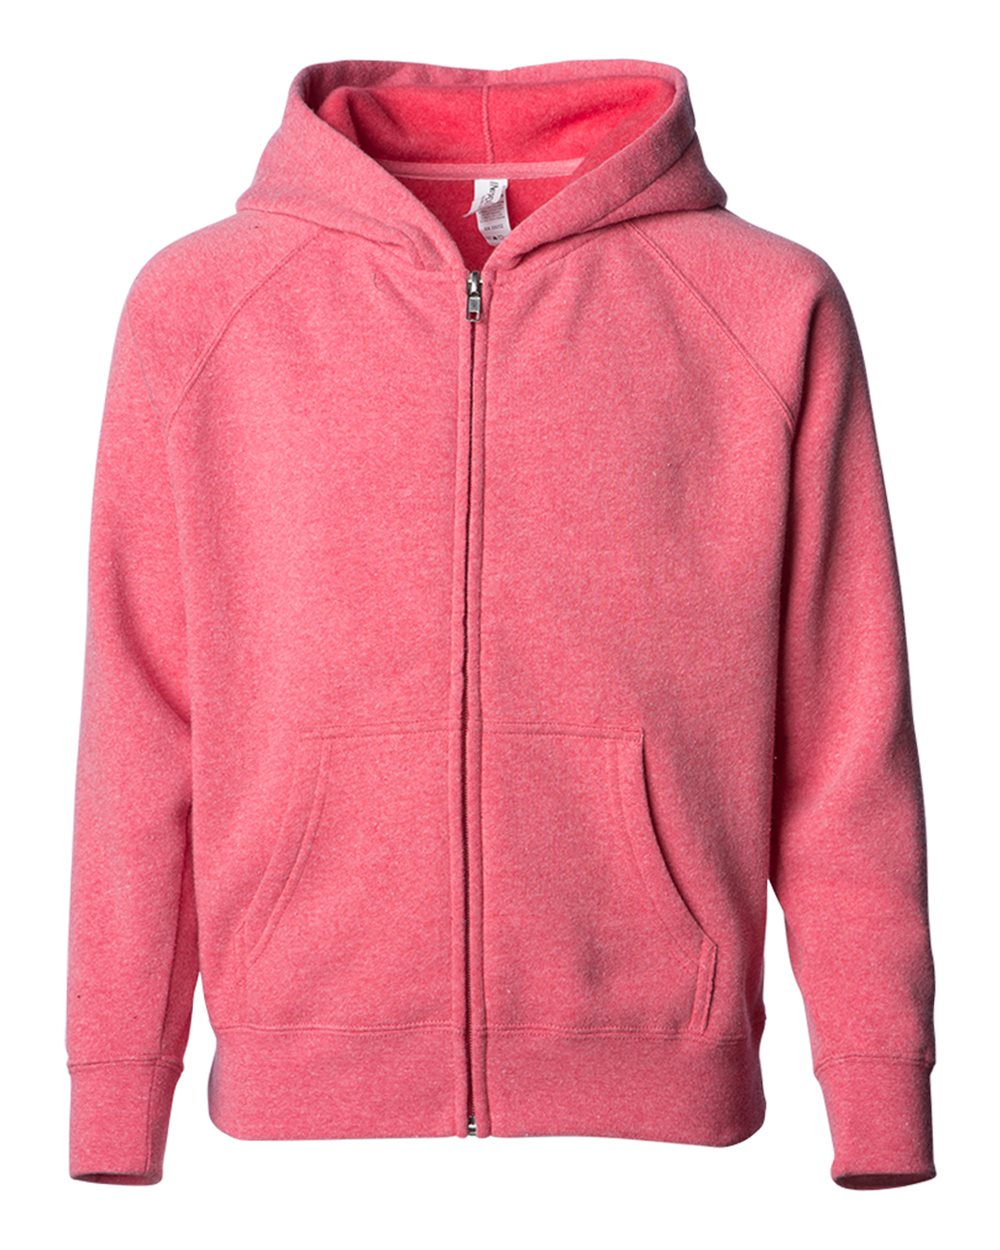 kids hoodies Toddler Lightweight Special Blend Raglan Zip Hood